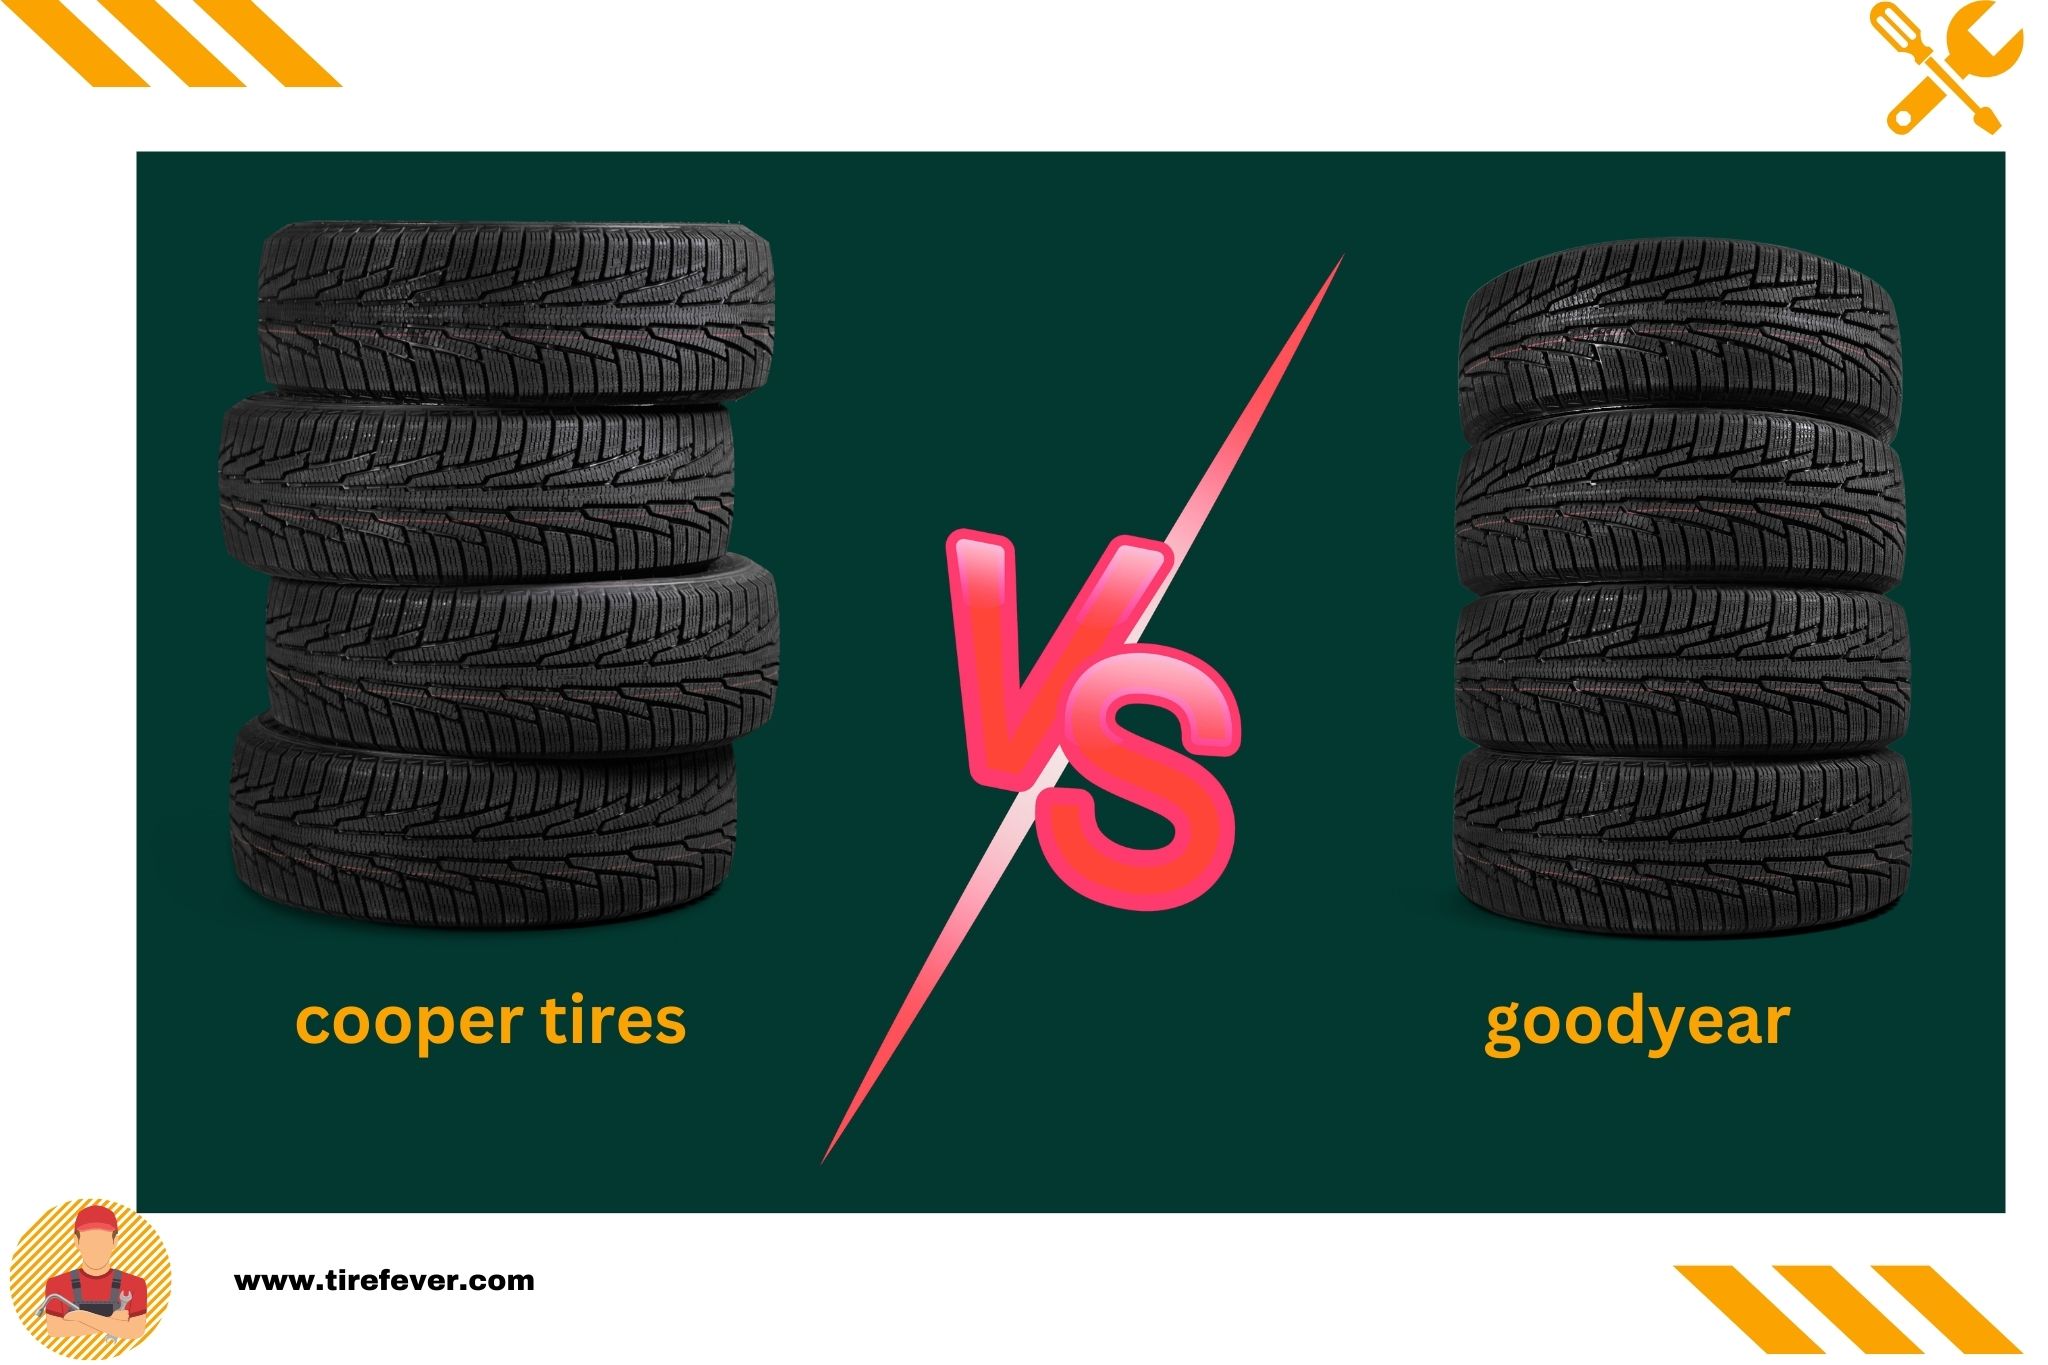 cooper tires vs goodyear